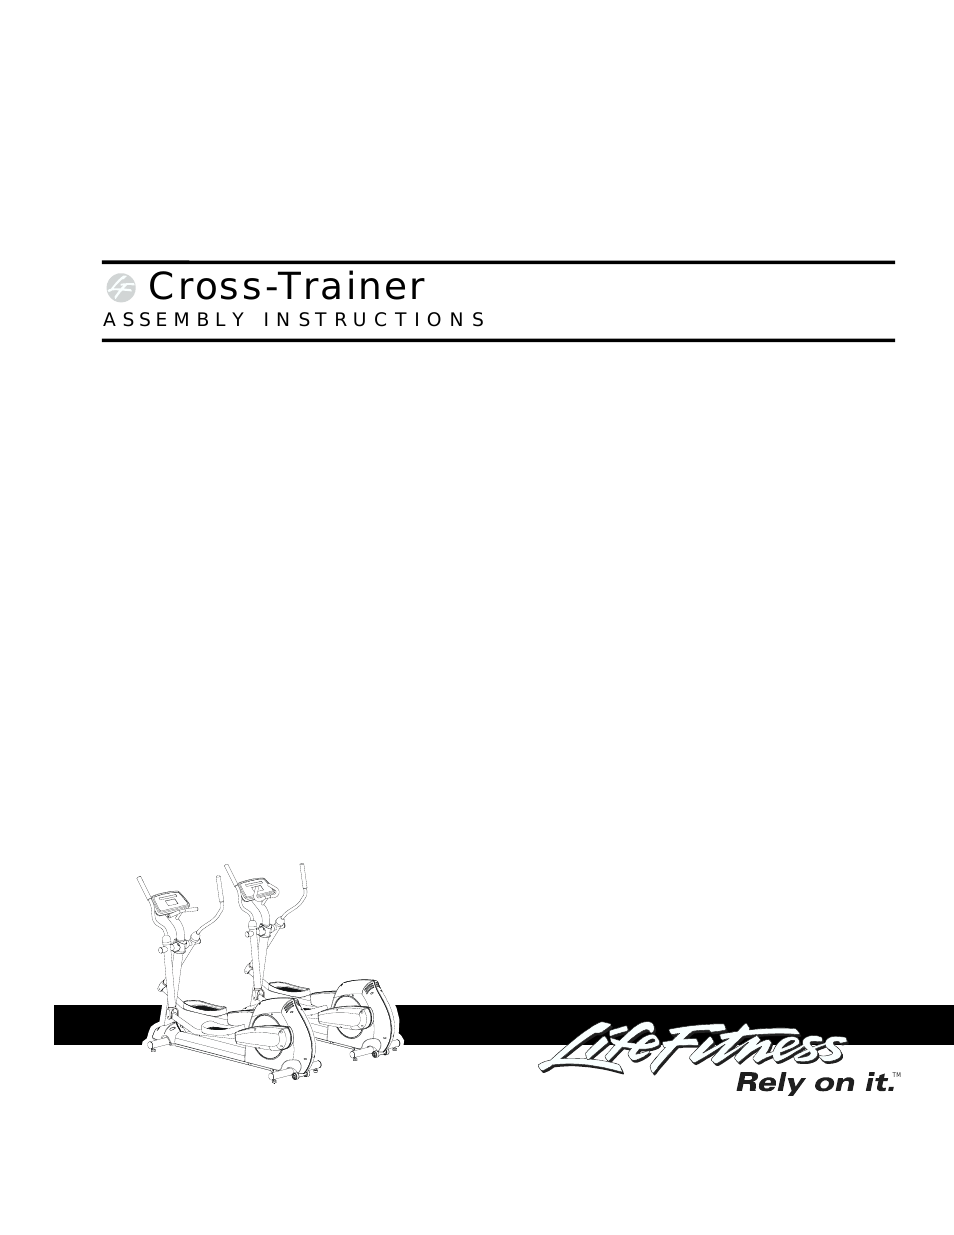 Cross-Trainer